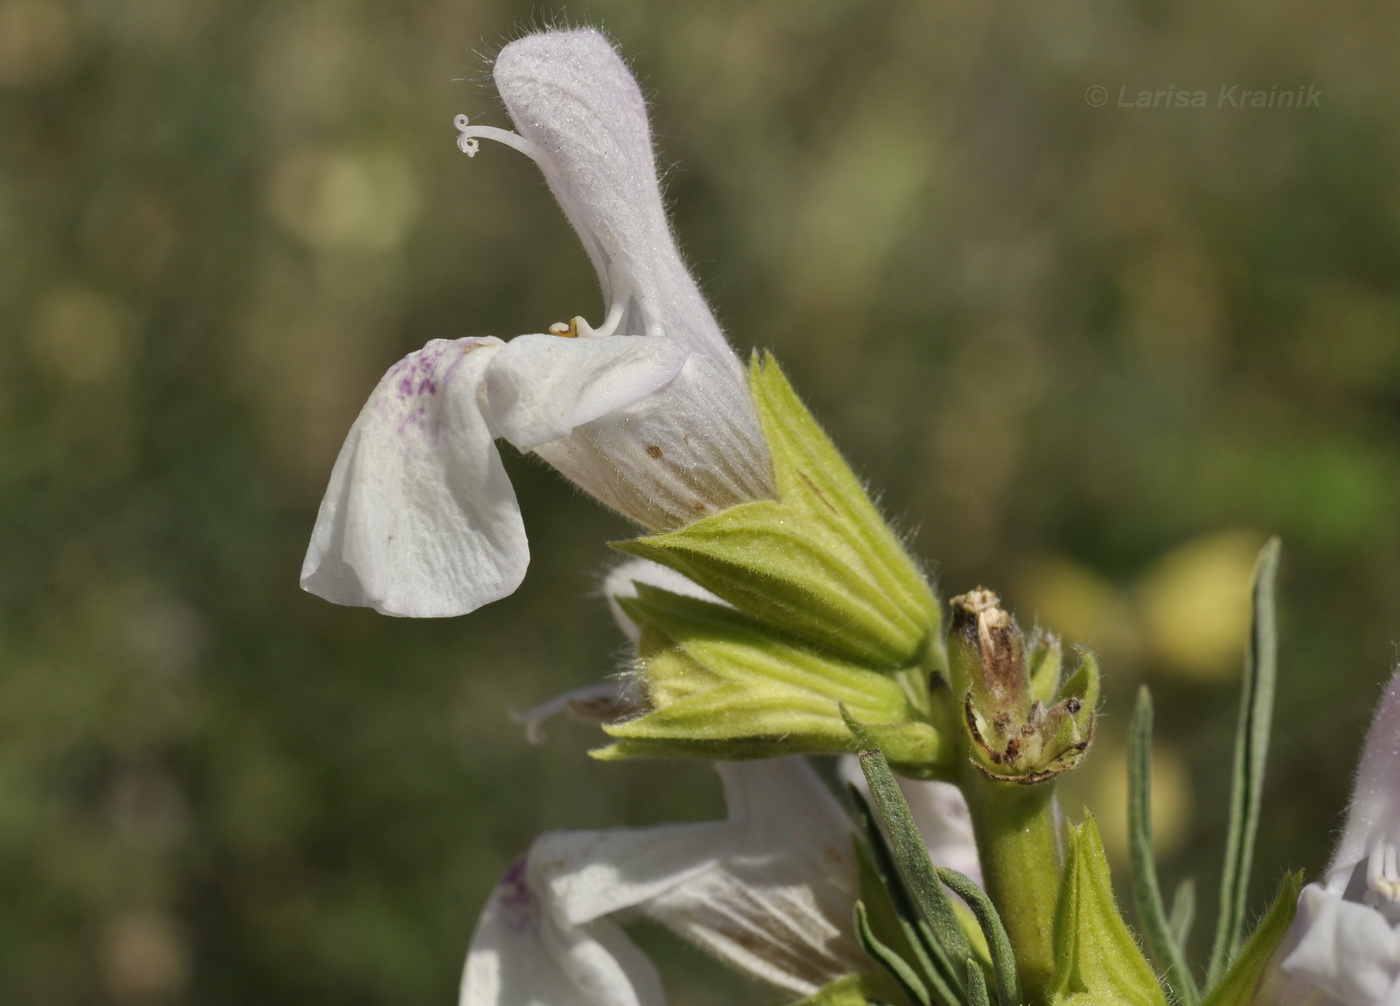 Изображение особи Salvia scabiosifolia.